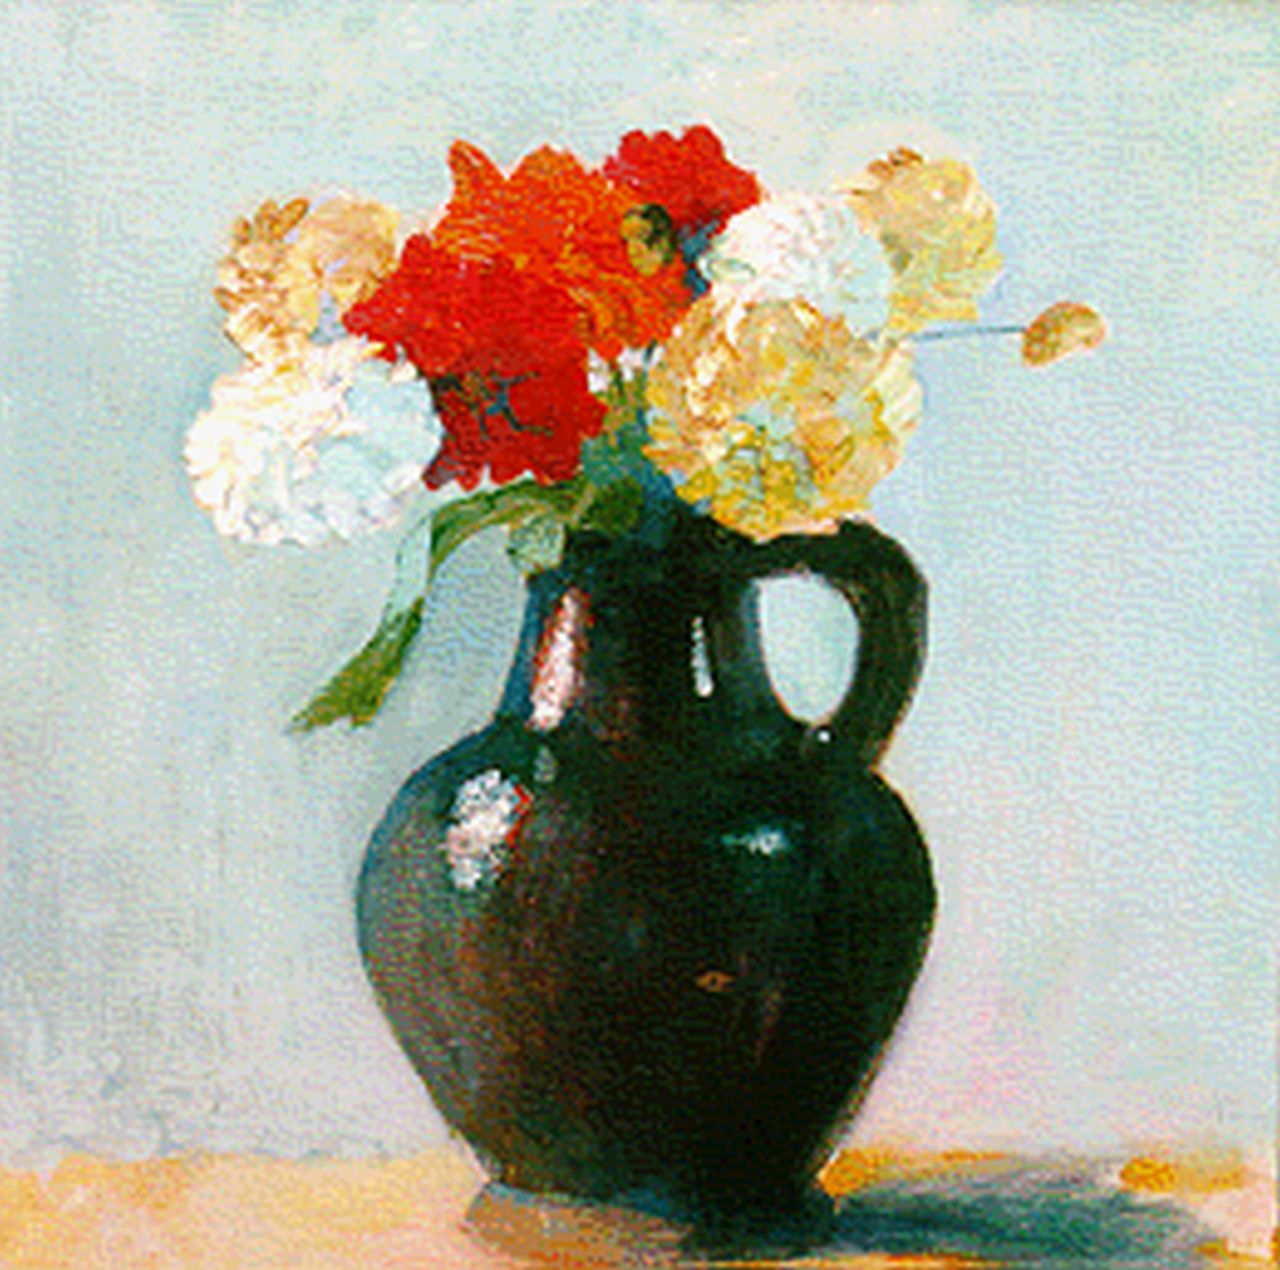 Hogerwaard G.  | Georges 'George' Hogerwaard, Bloemen in een vaas, olieverf op doek 65,0 x 60,0 cm, gesigneerd rechtsonder